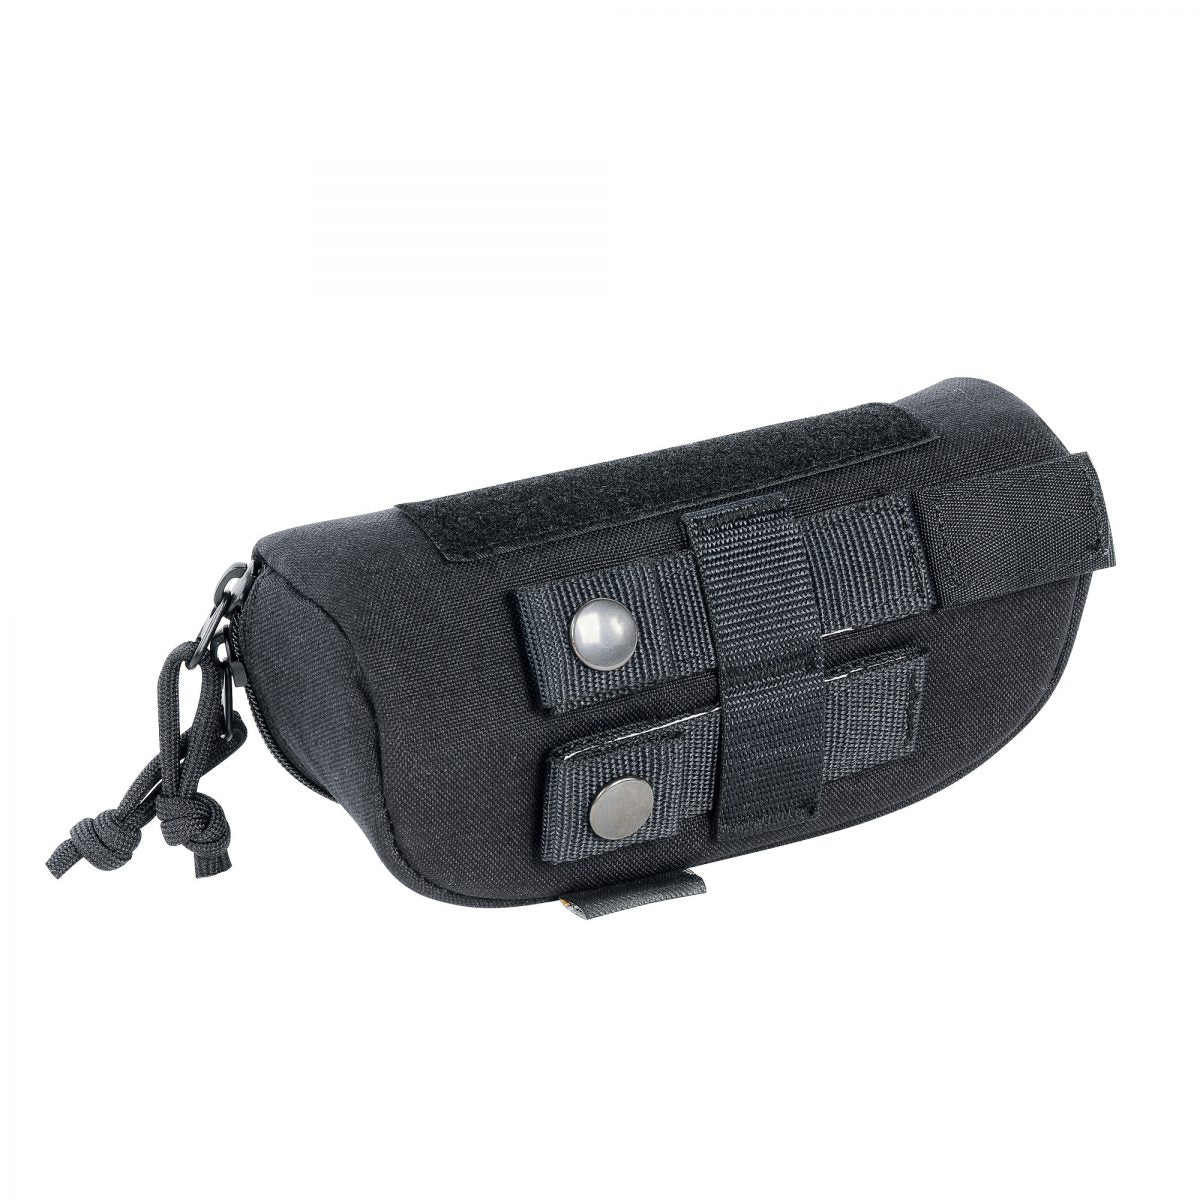 Tasmanian Tiger Eyewear Safe Zip-Up Bag for Sunglasses Tactical Distributors Ltd New Zealand